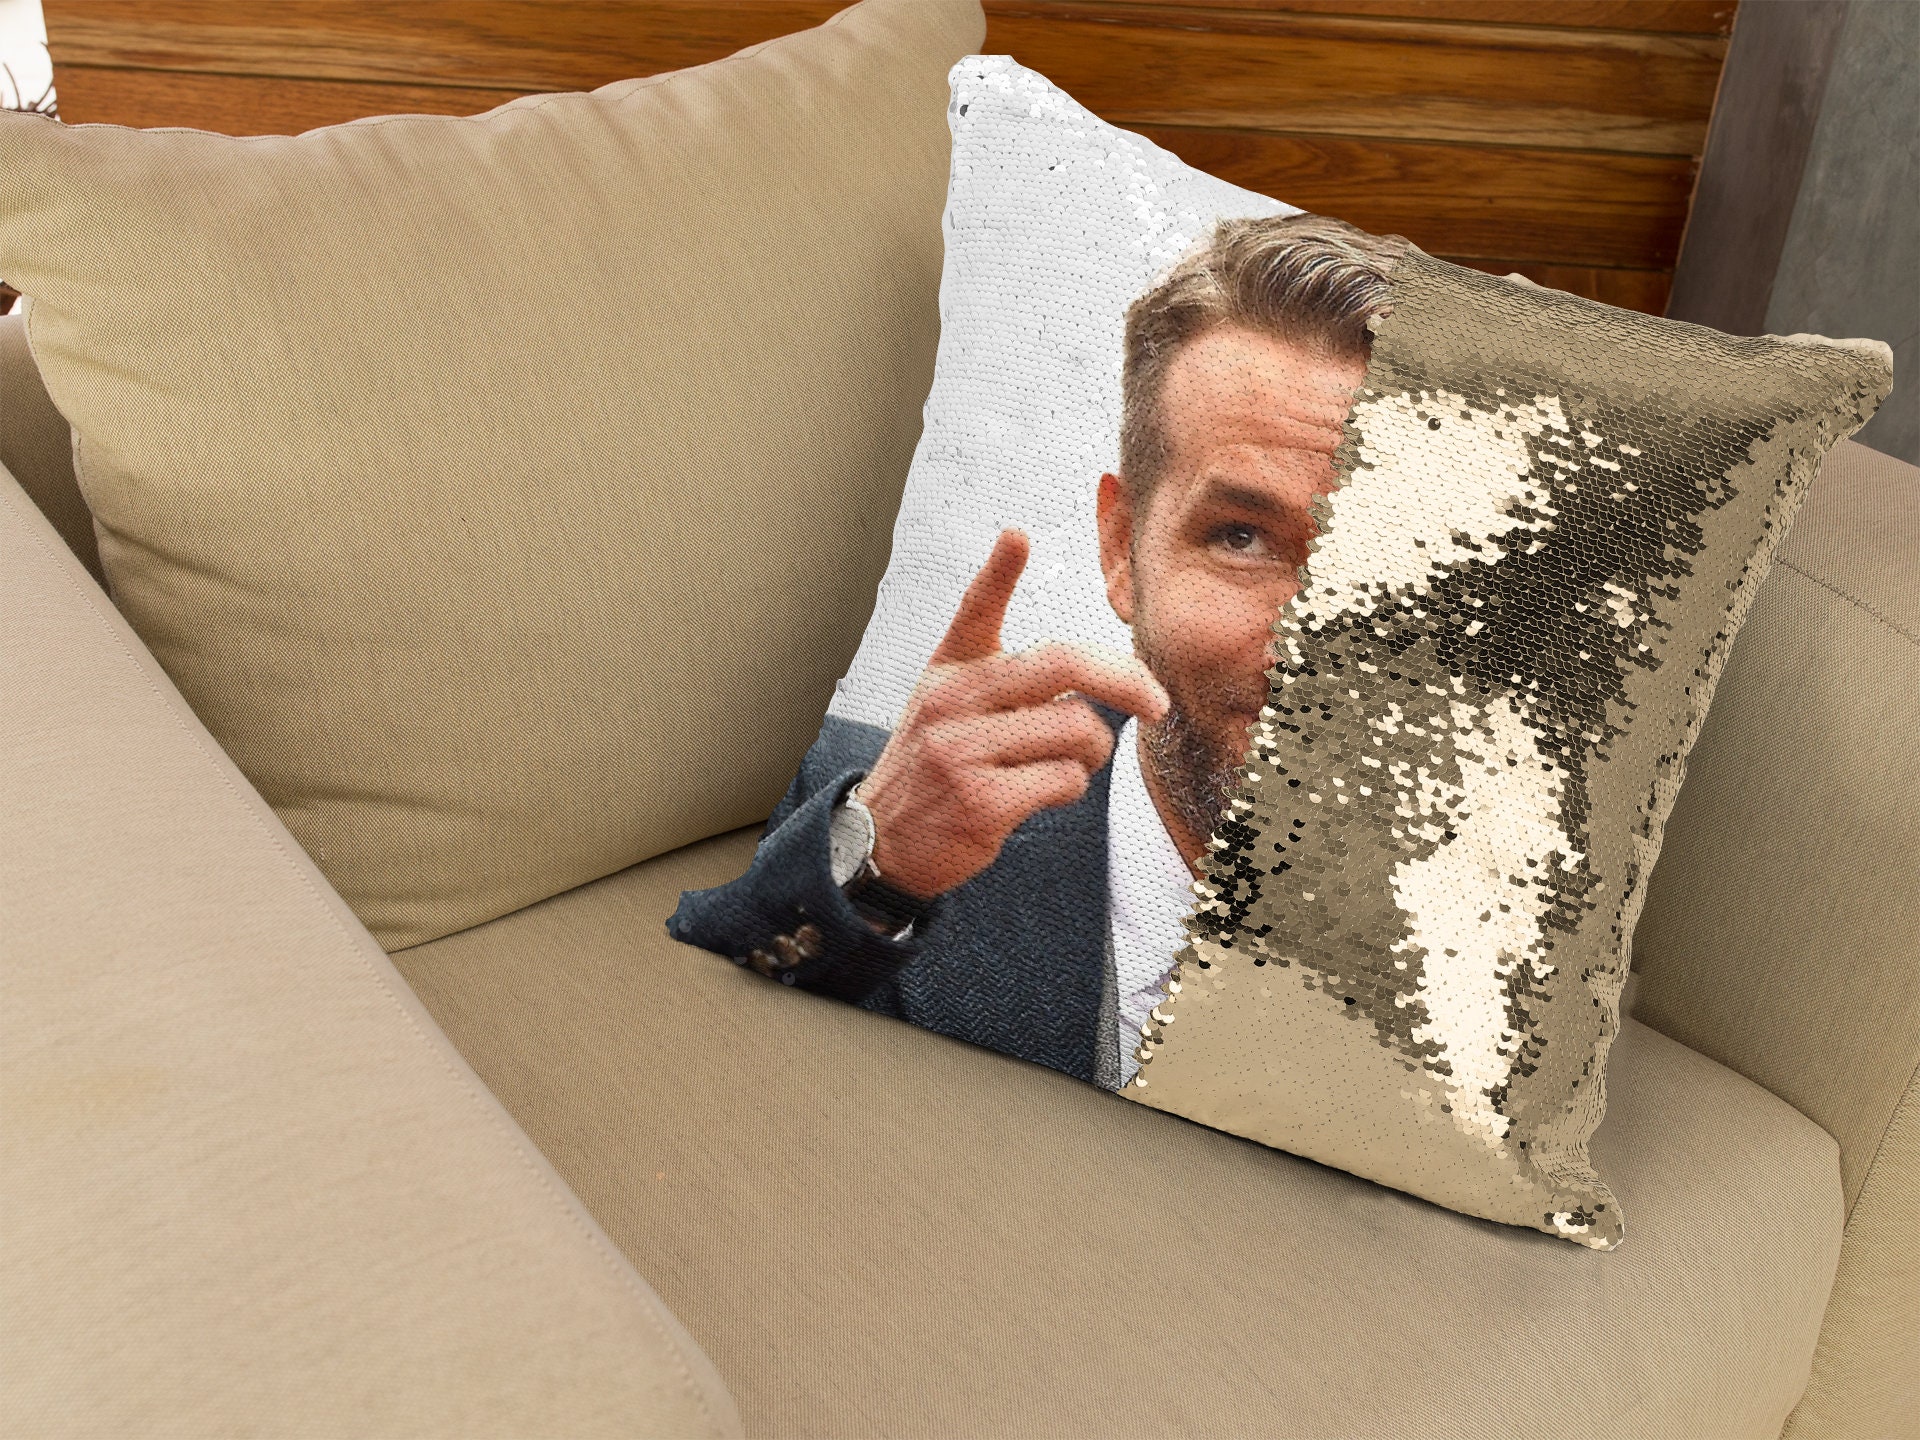 Ryan Reynolds Throw Pillow by Siggy Ellezingue - Pixels